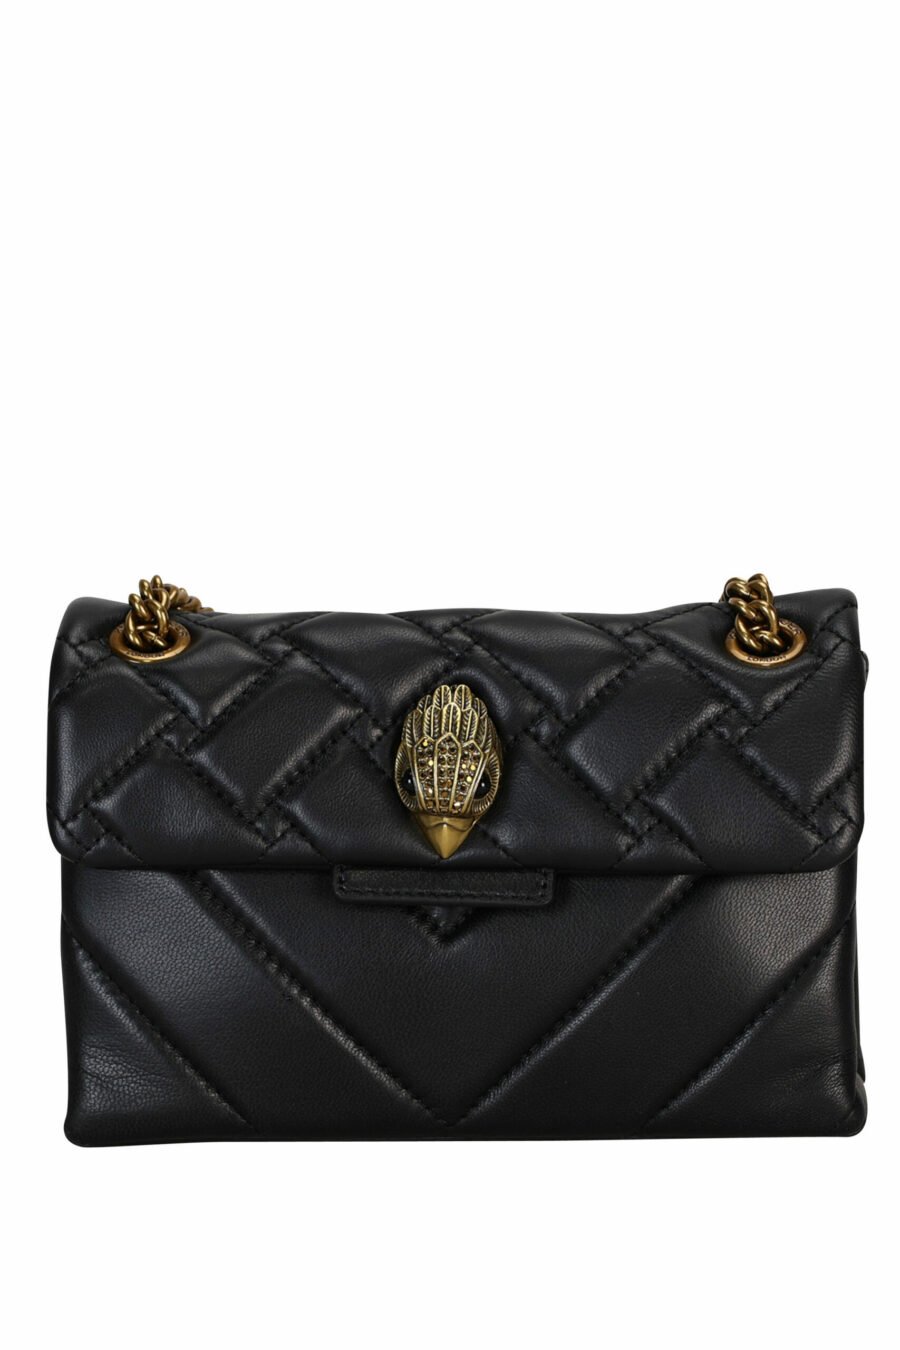 Mini black quilted shoulder bag with golden eagle logo with black crystals - 5057720813637 scaled